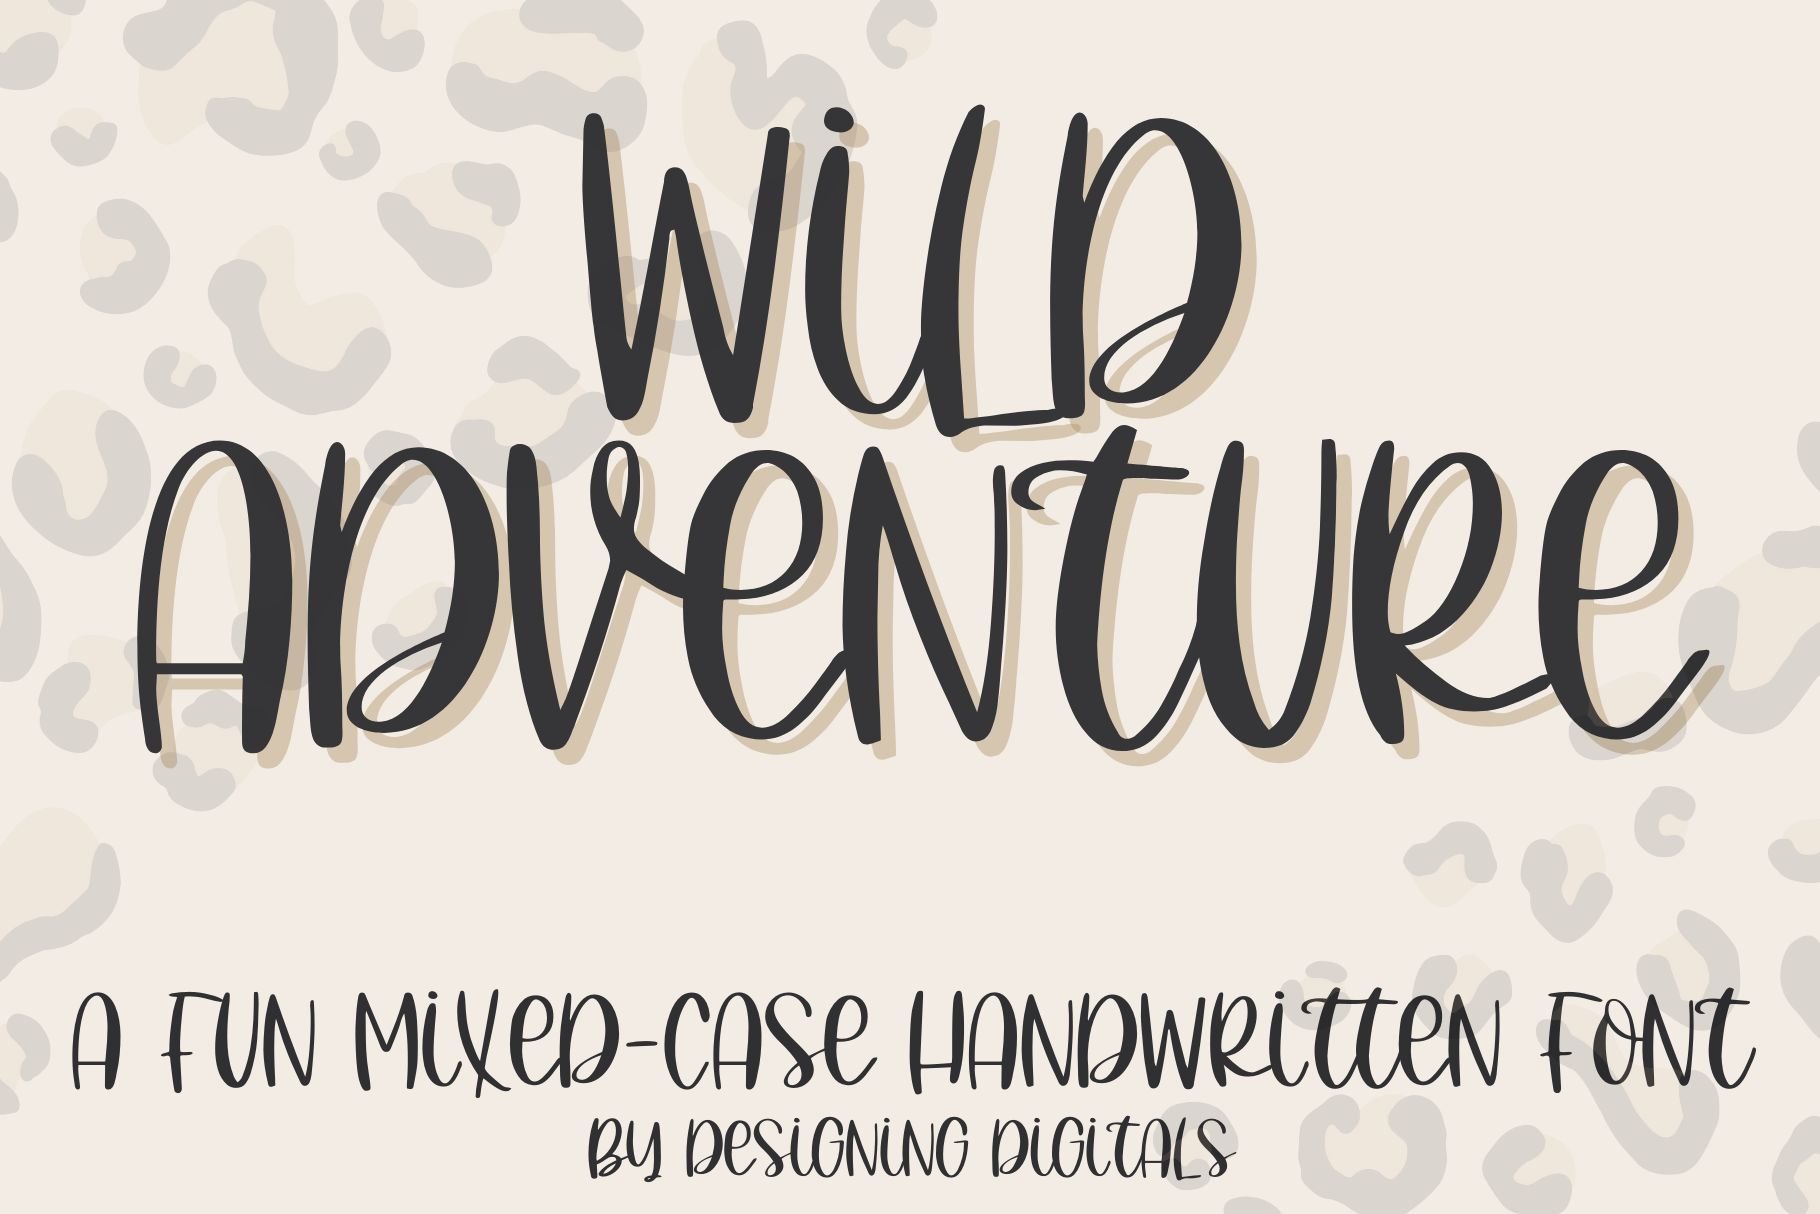 Wild Adventure Handwritten Script cover image.